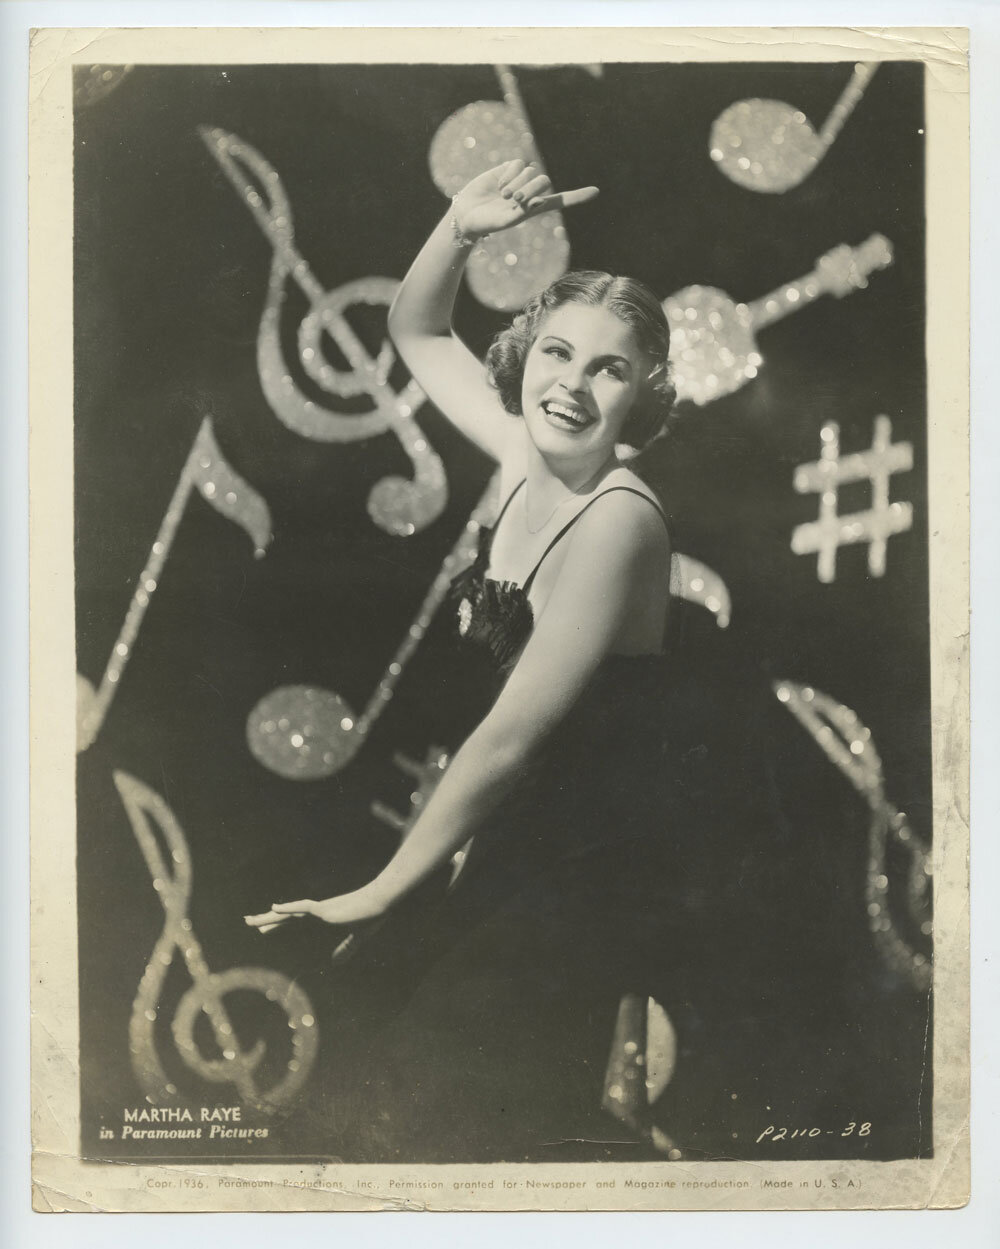 Martha Raye Photo 1937 Paramount Pictures Original Vintage